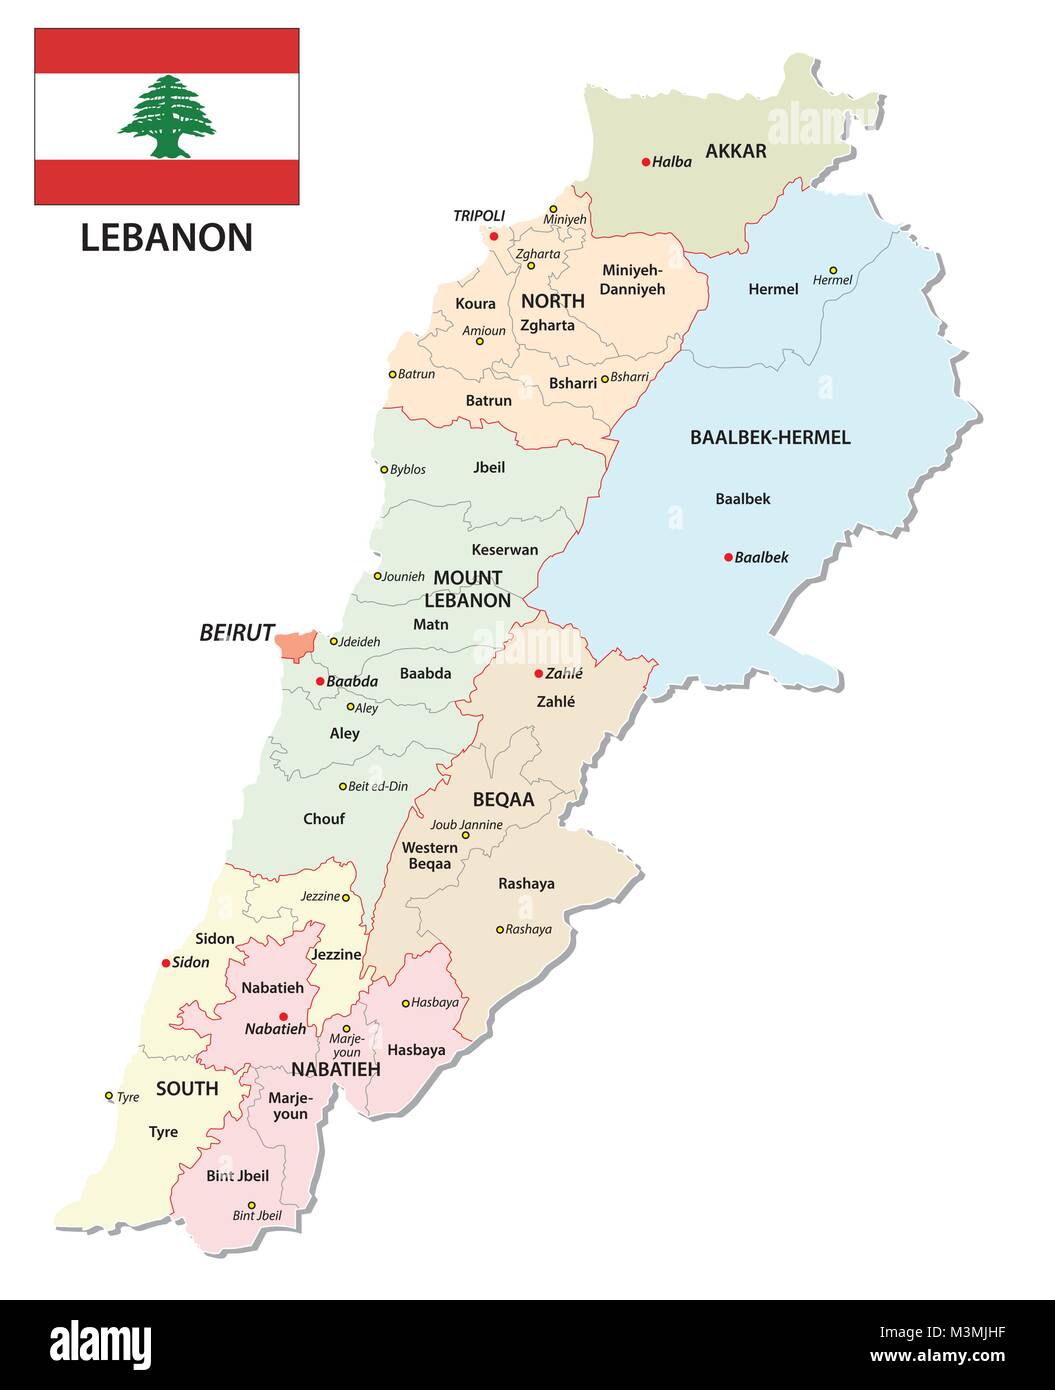 Map Of Lebanon Lebanon Map Lebanon Map Images